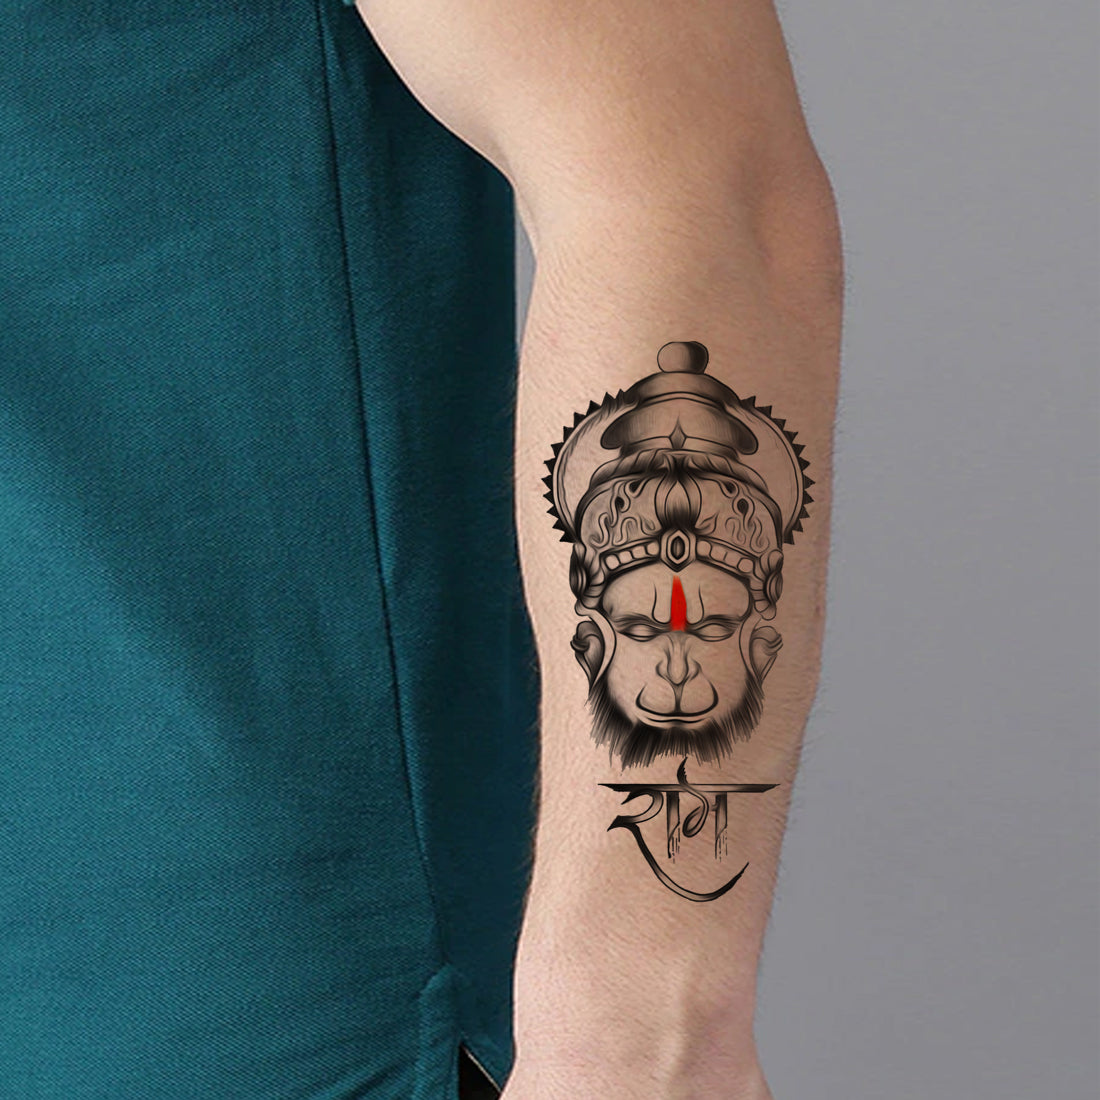 Hanuman Tattoo - Powerful and Symbolic Design